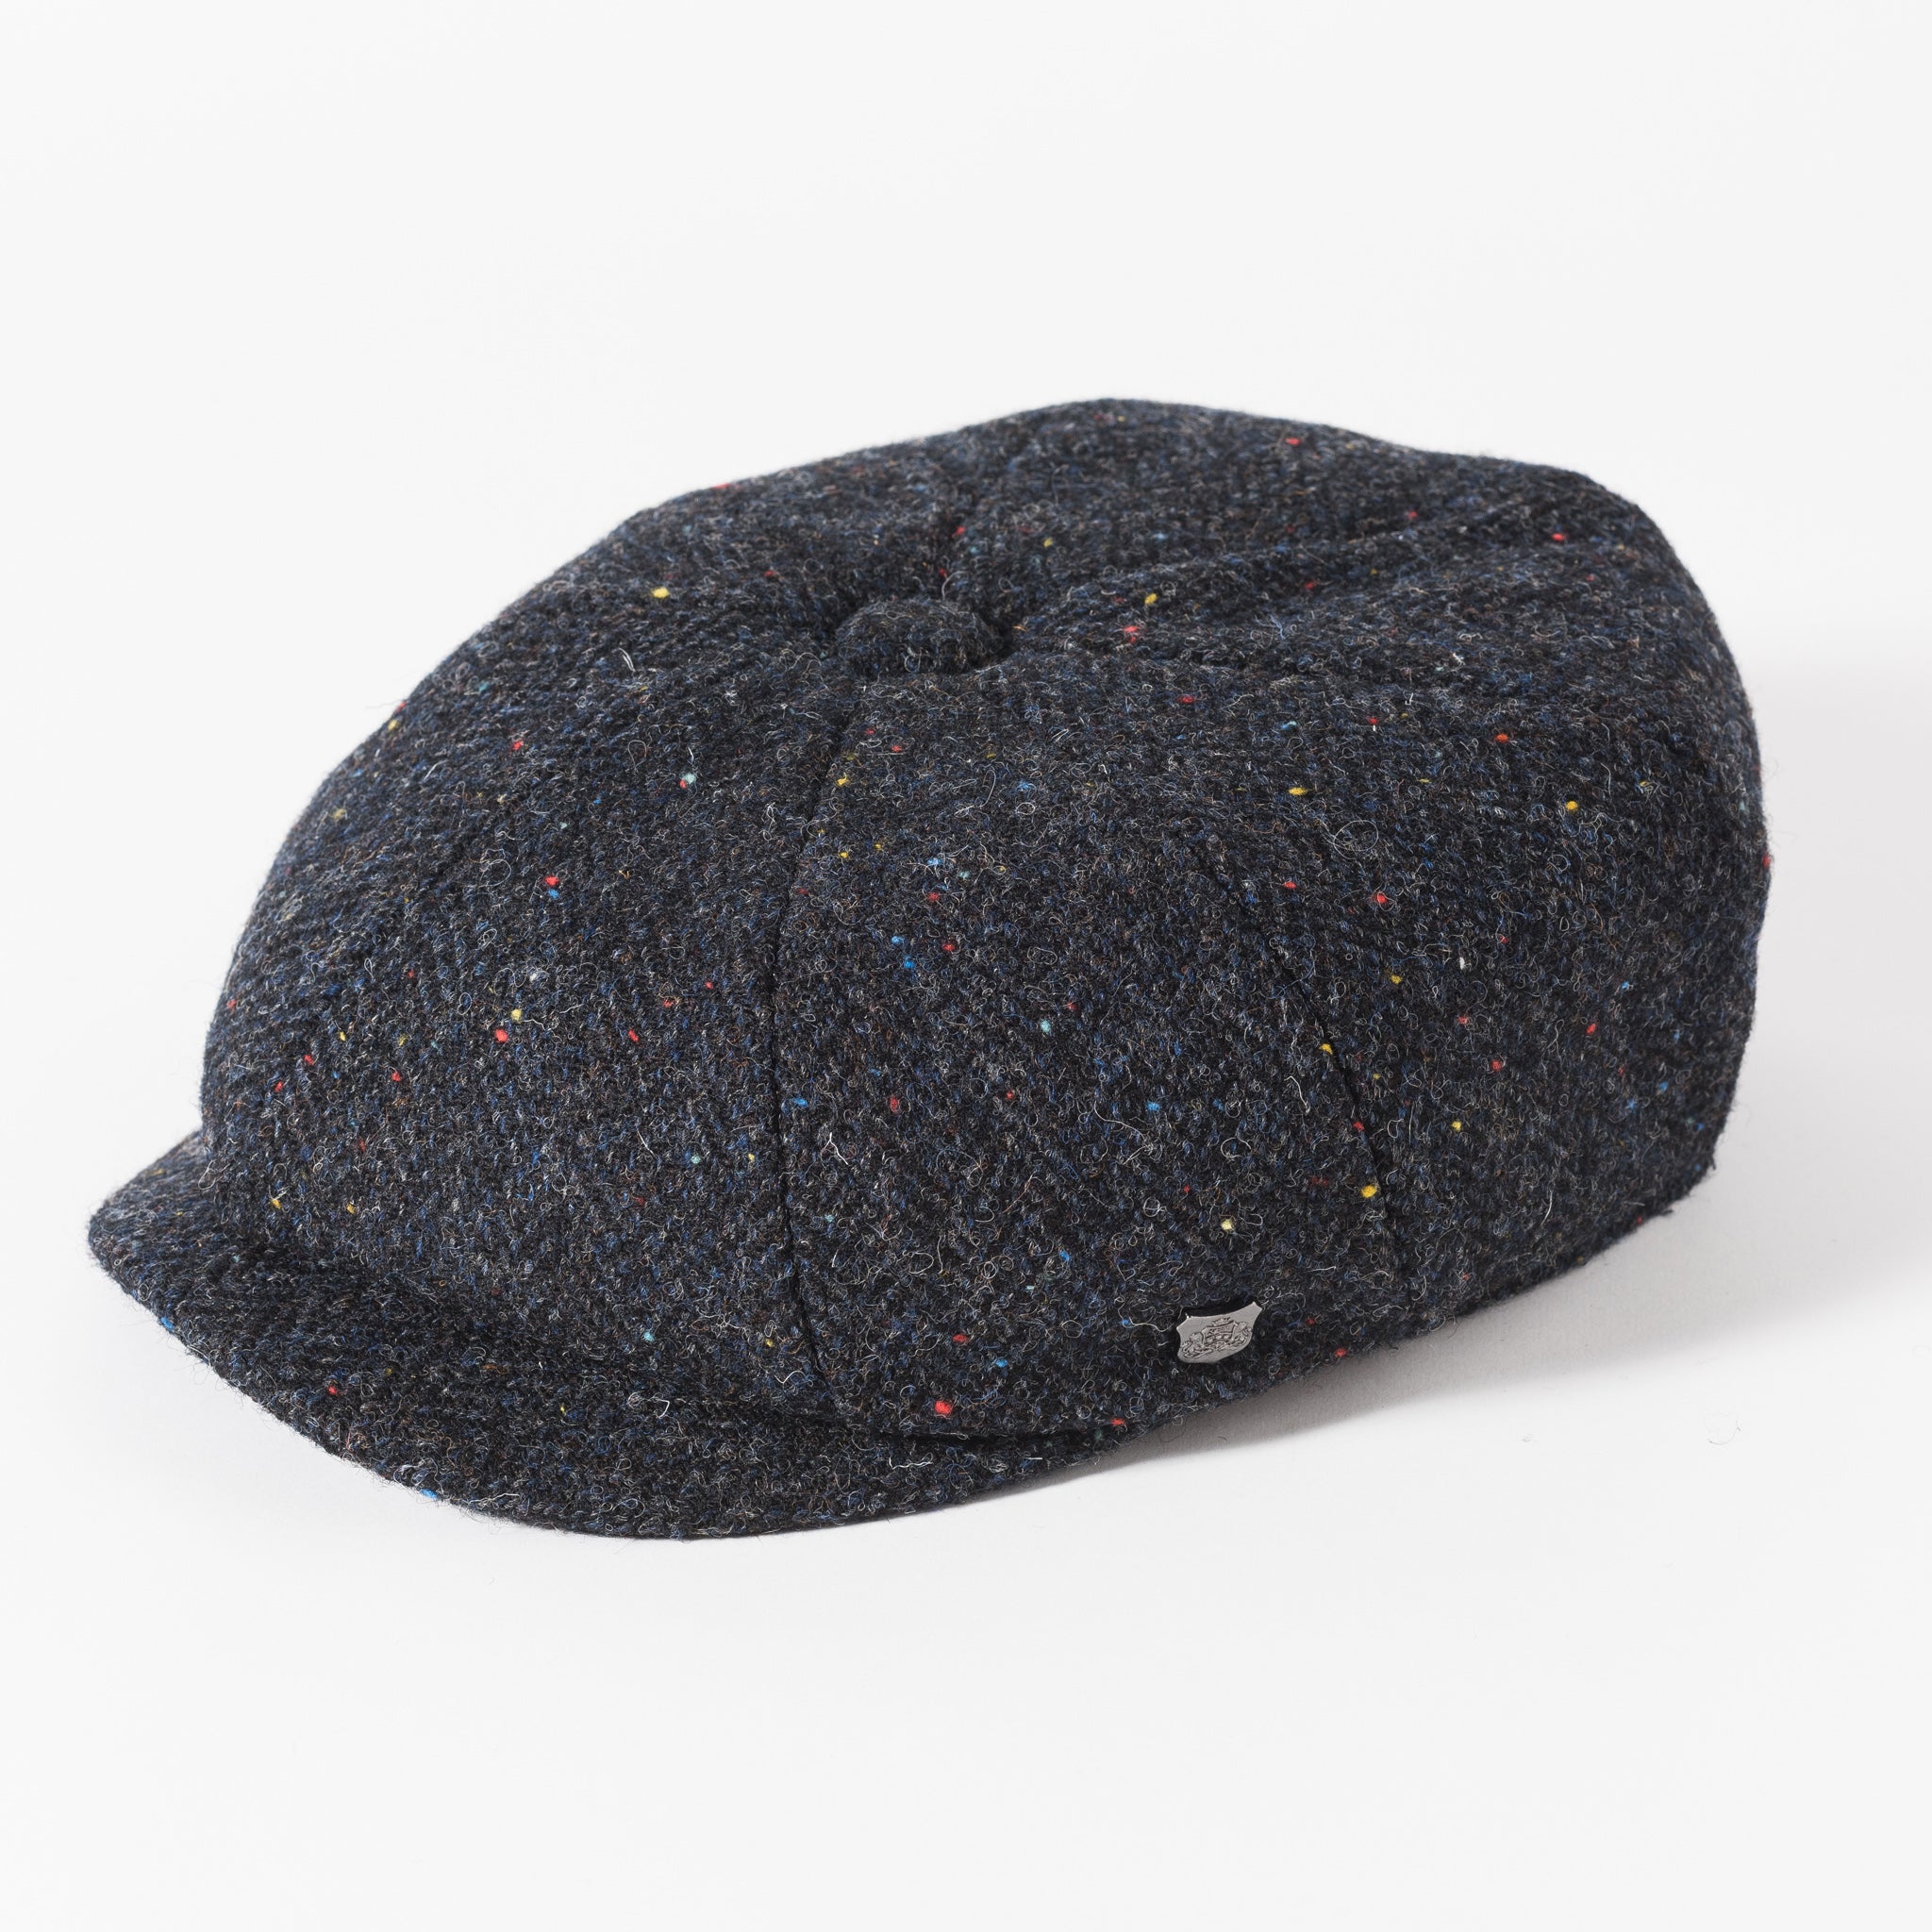 The Hat Shop Failsworth Harris Tweed Carloway Bakerboy Cap Black Fleck